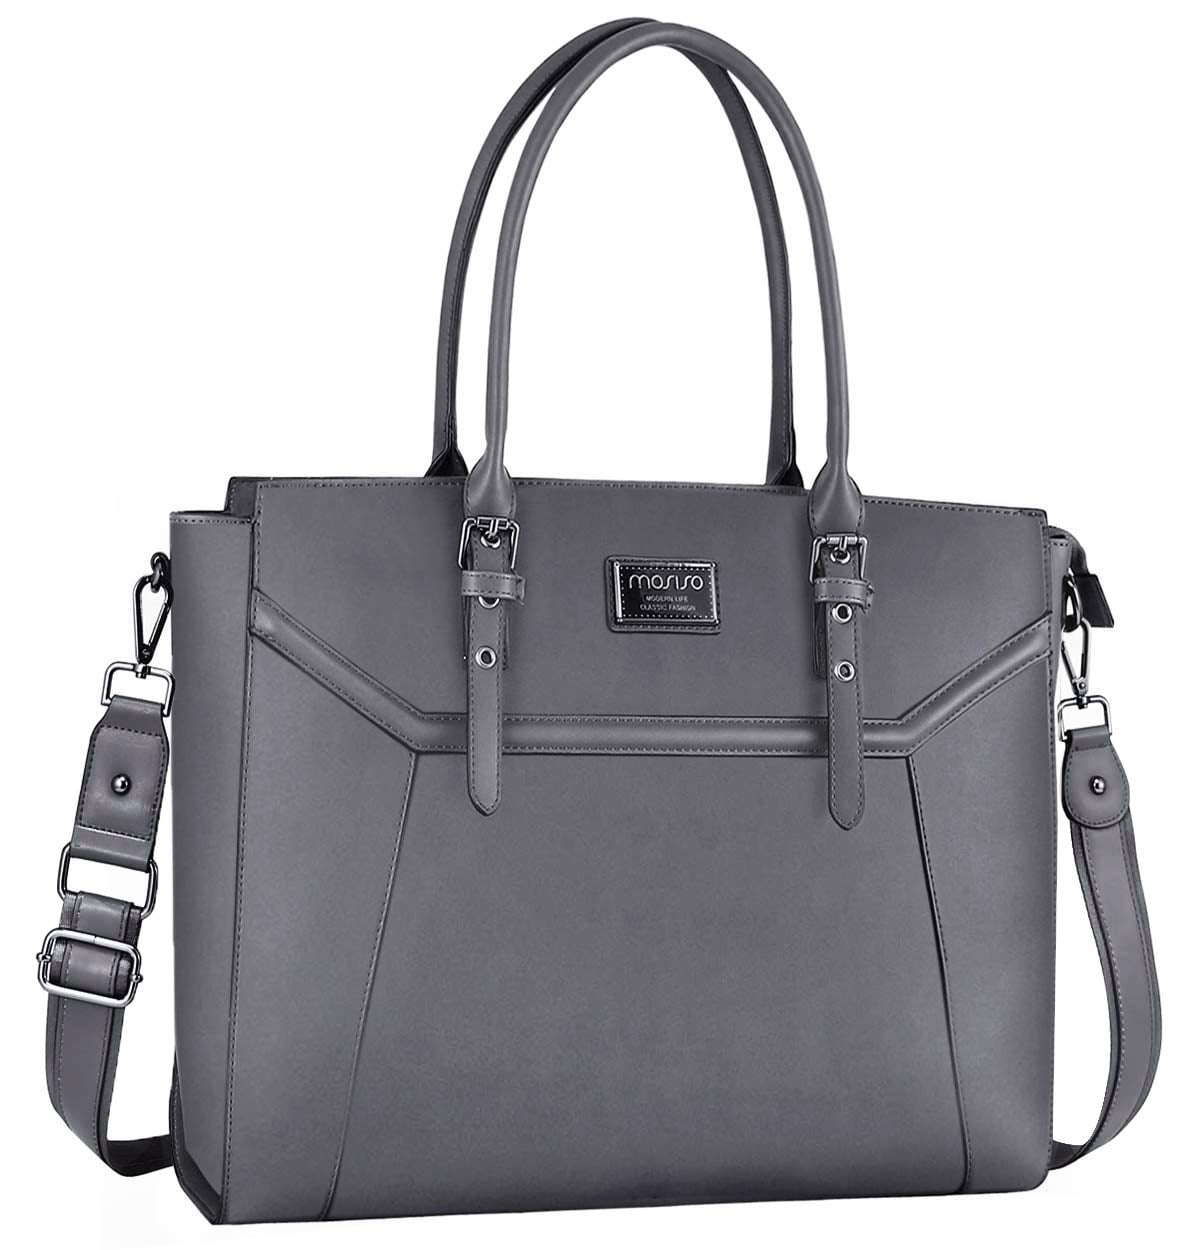 Buy Women's Stylish Medium handbags~Vegan leather Satchel handbag Top  handle purse Classic/Fashion Tote bags at Amazon.in